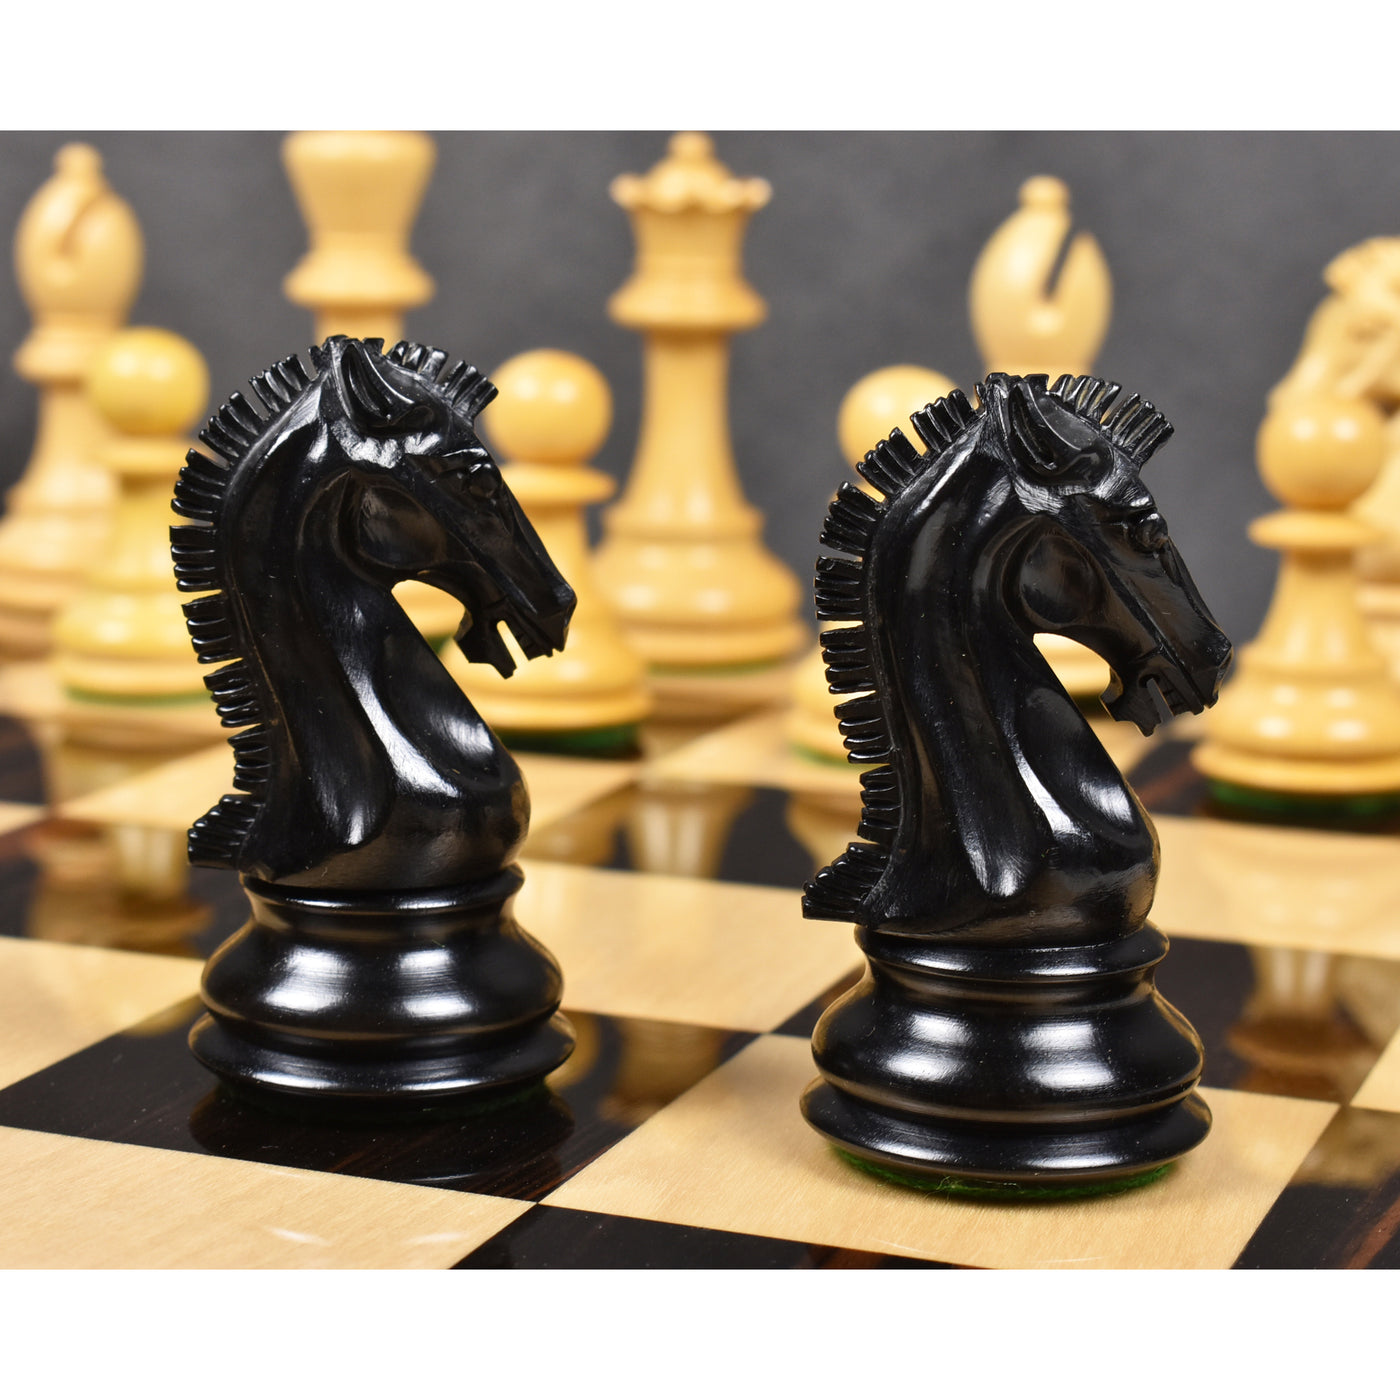 Slightly Imperfect 3.9" Craftsman Series Staunton Chess Pieces